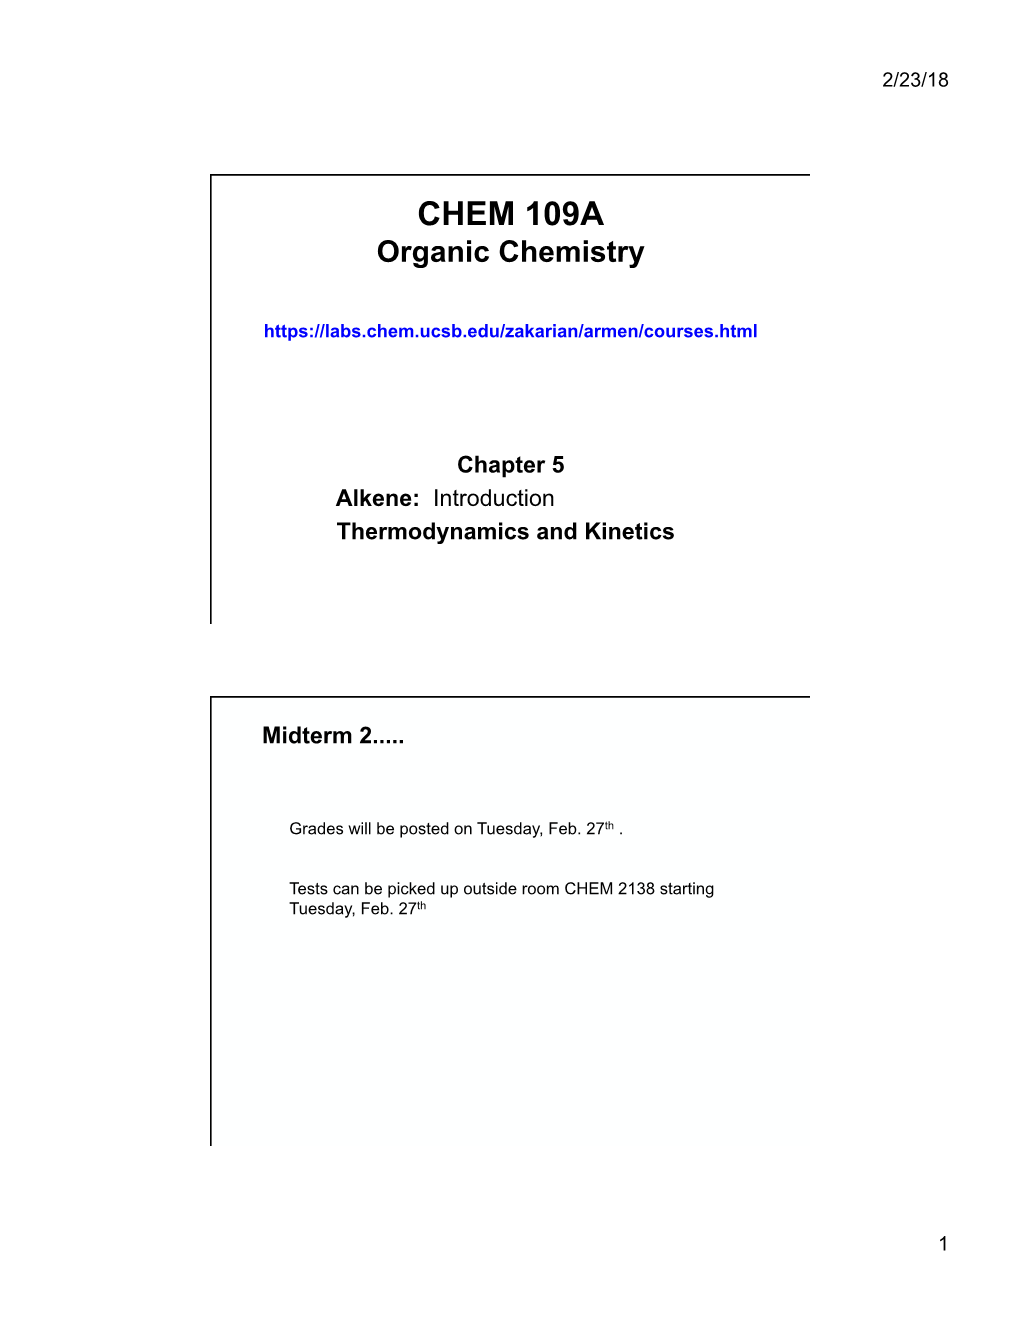 CHEM 109A Organic Chemistry